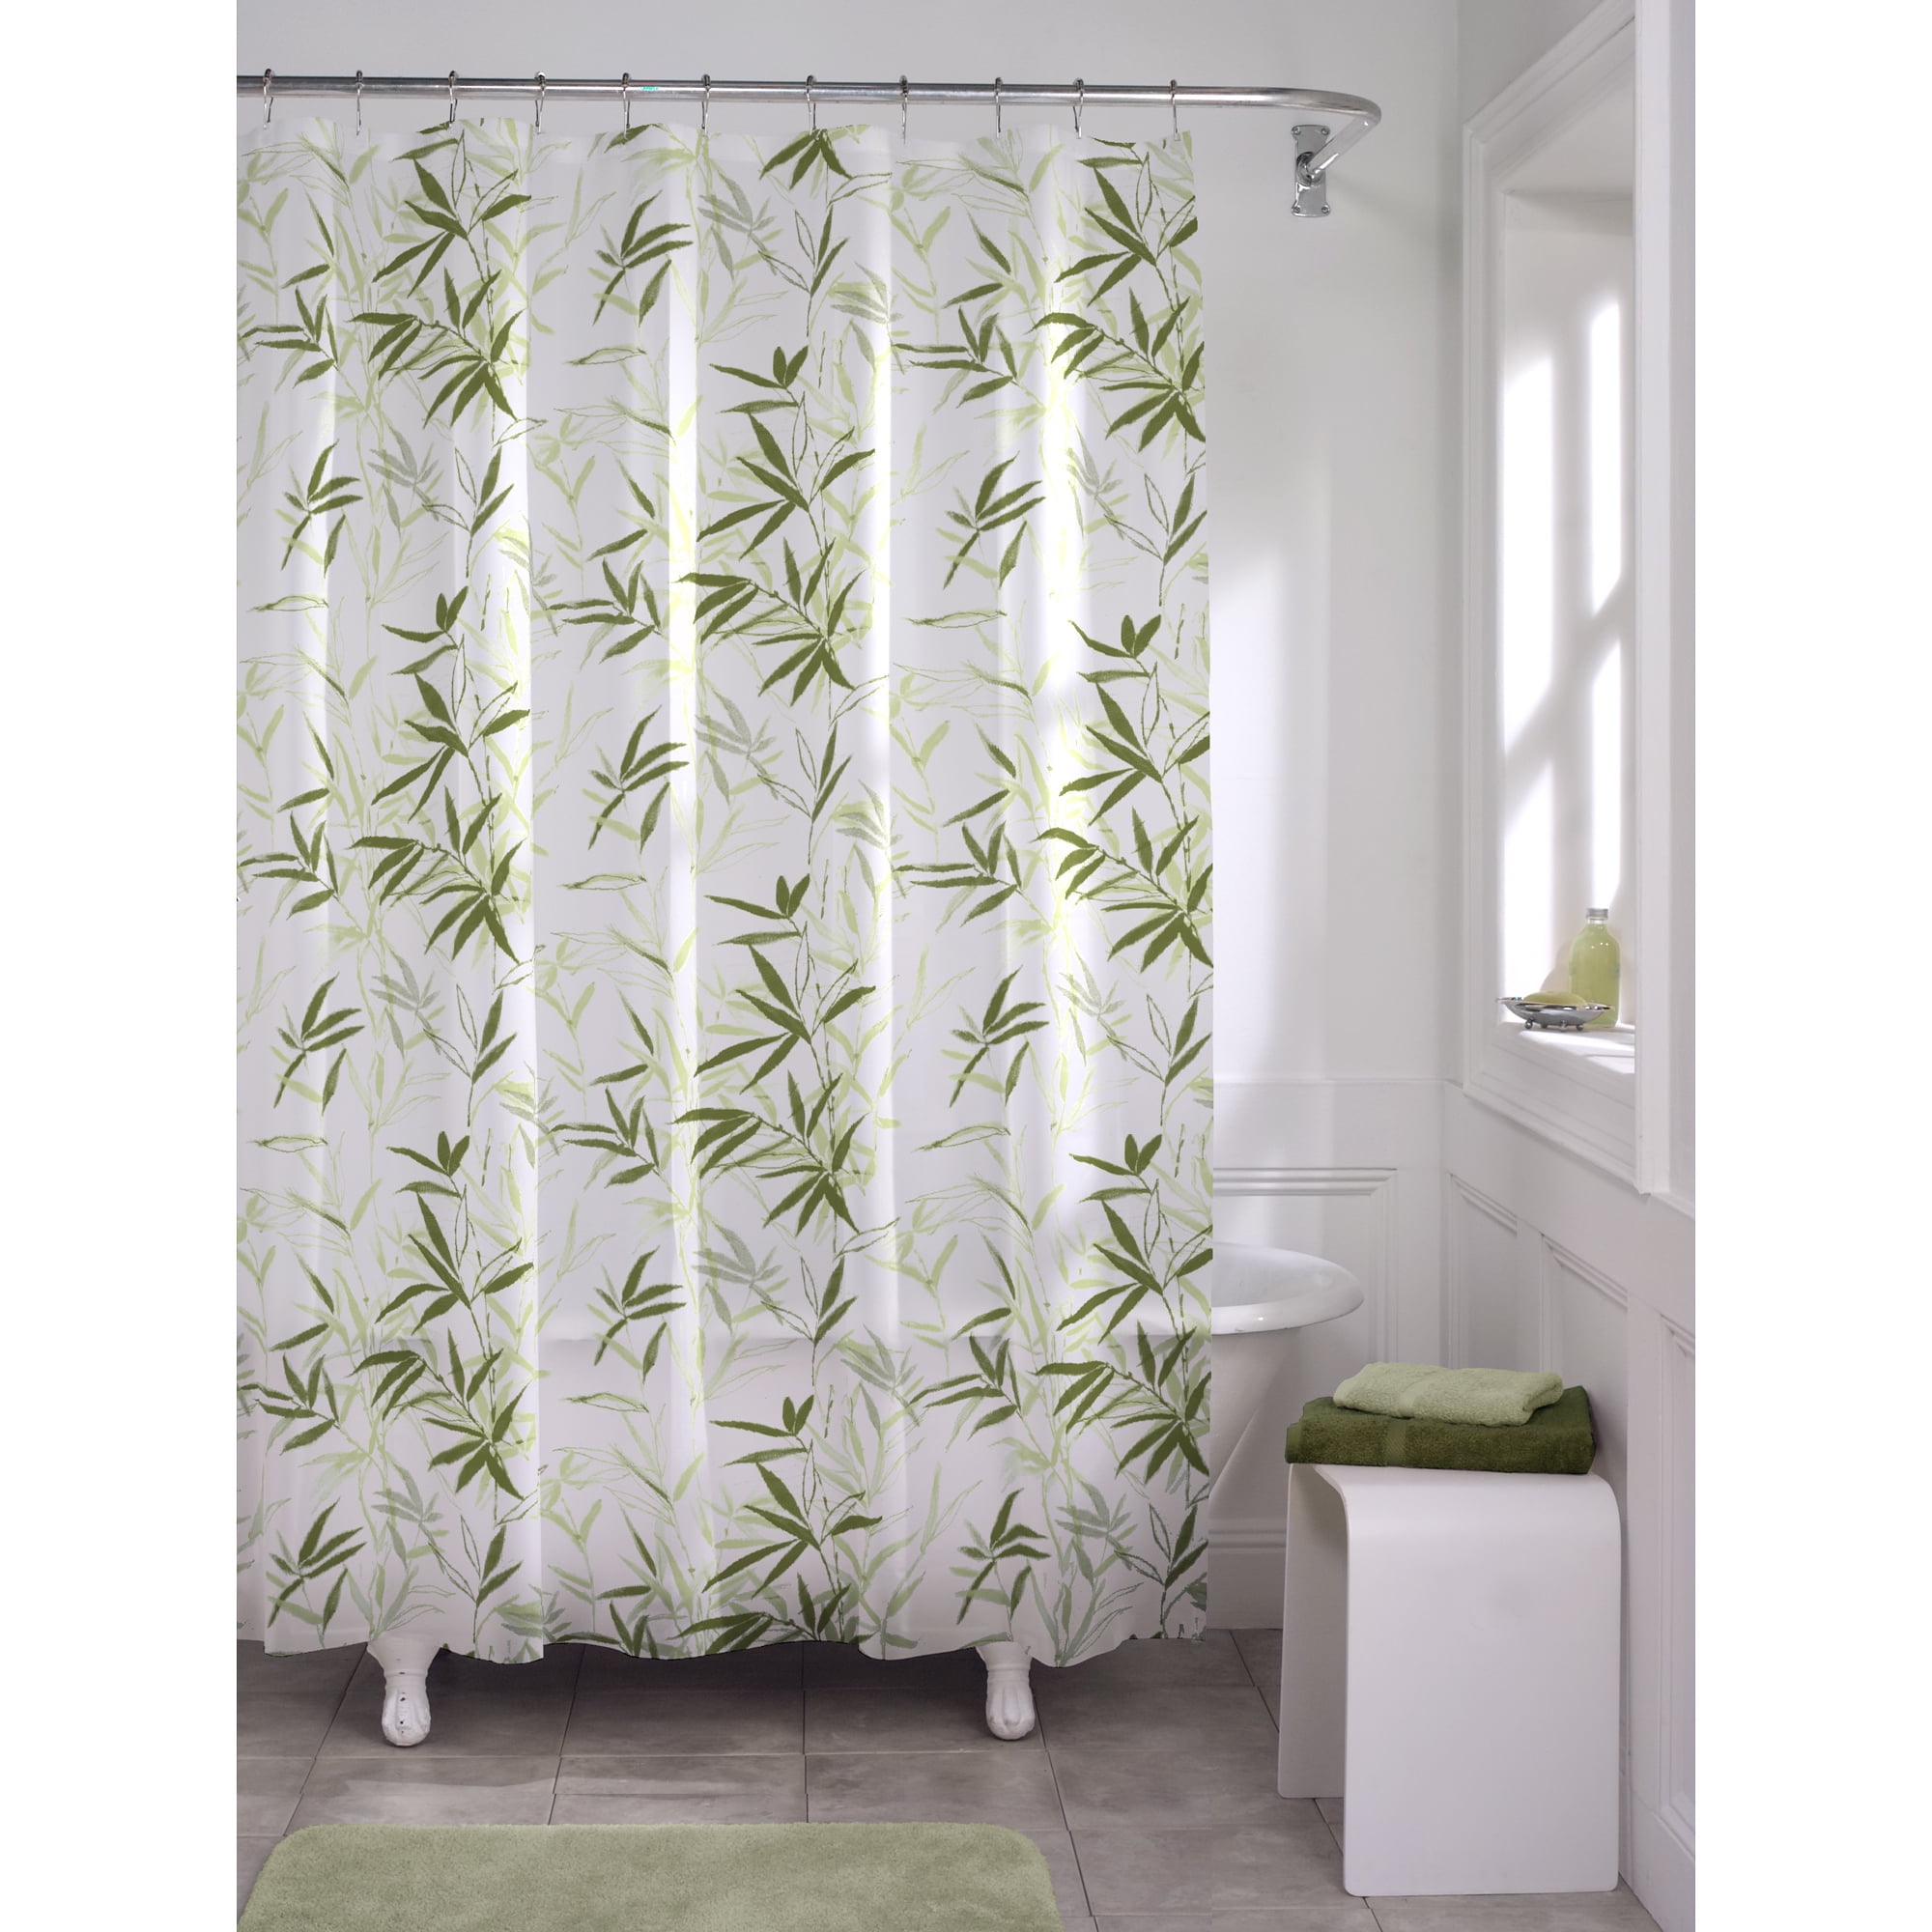 Metallic InterDesign Gilly Dot Pvc-Free Peva Fabric Shower Curtain 72x72-Inch